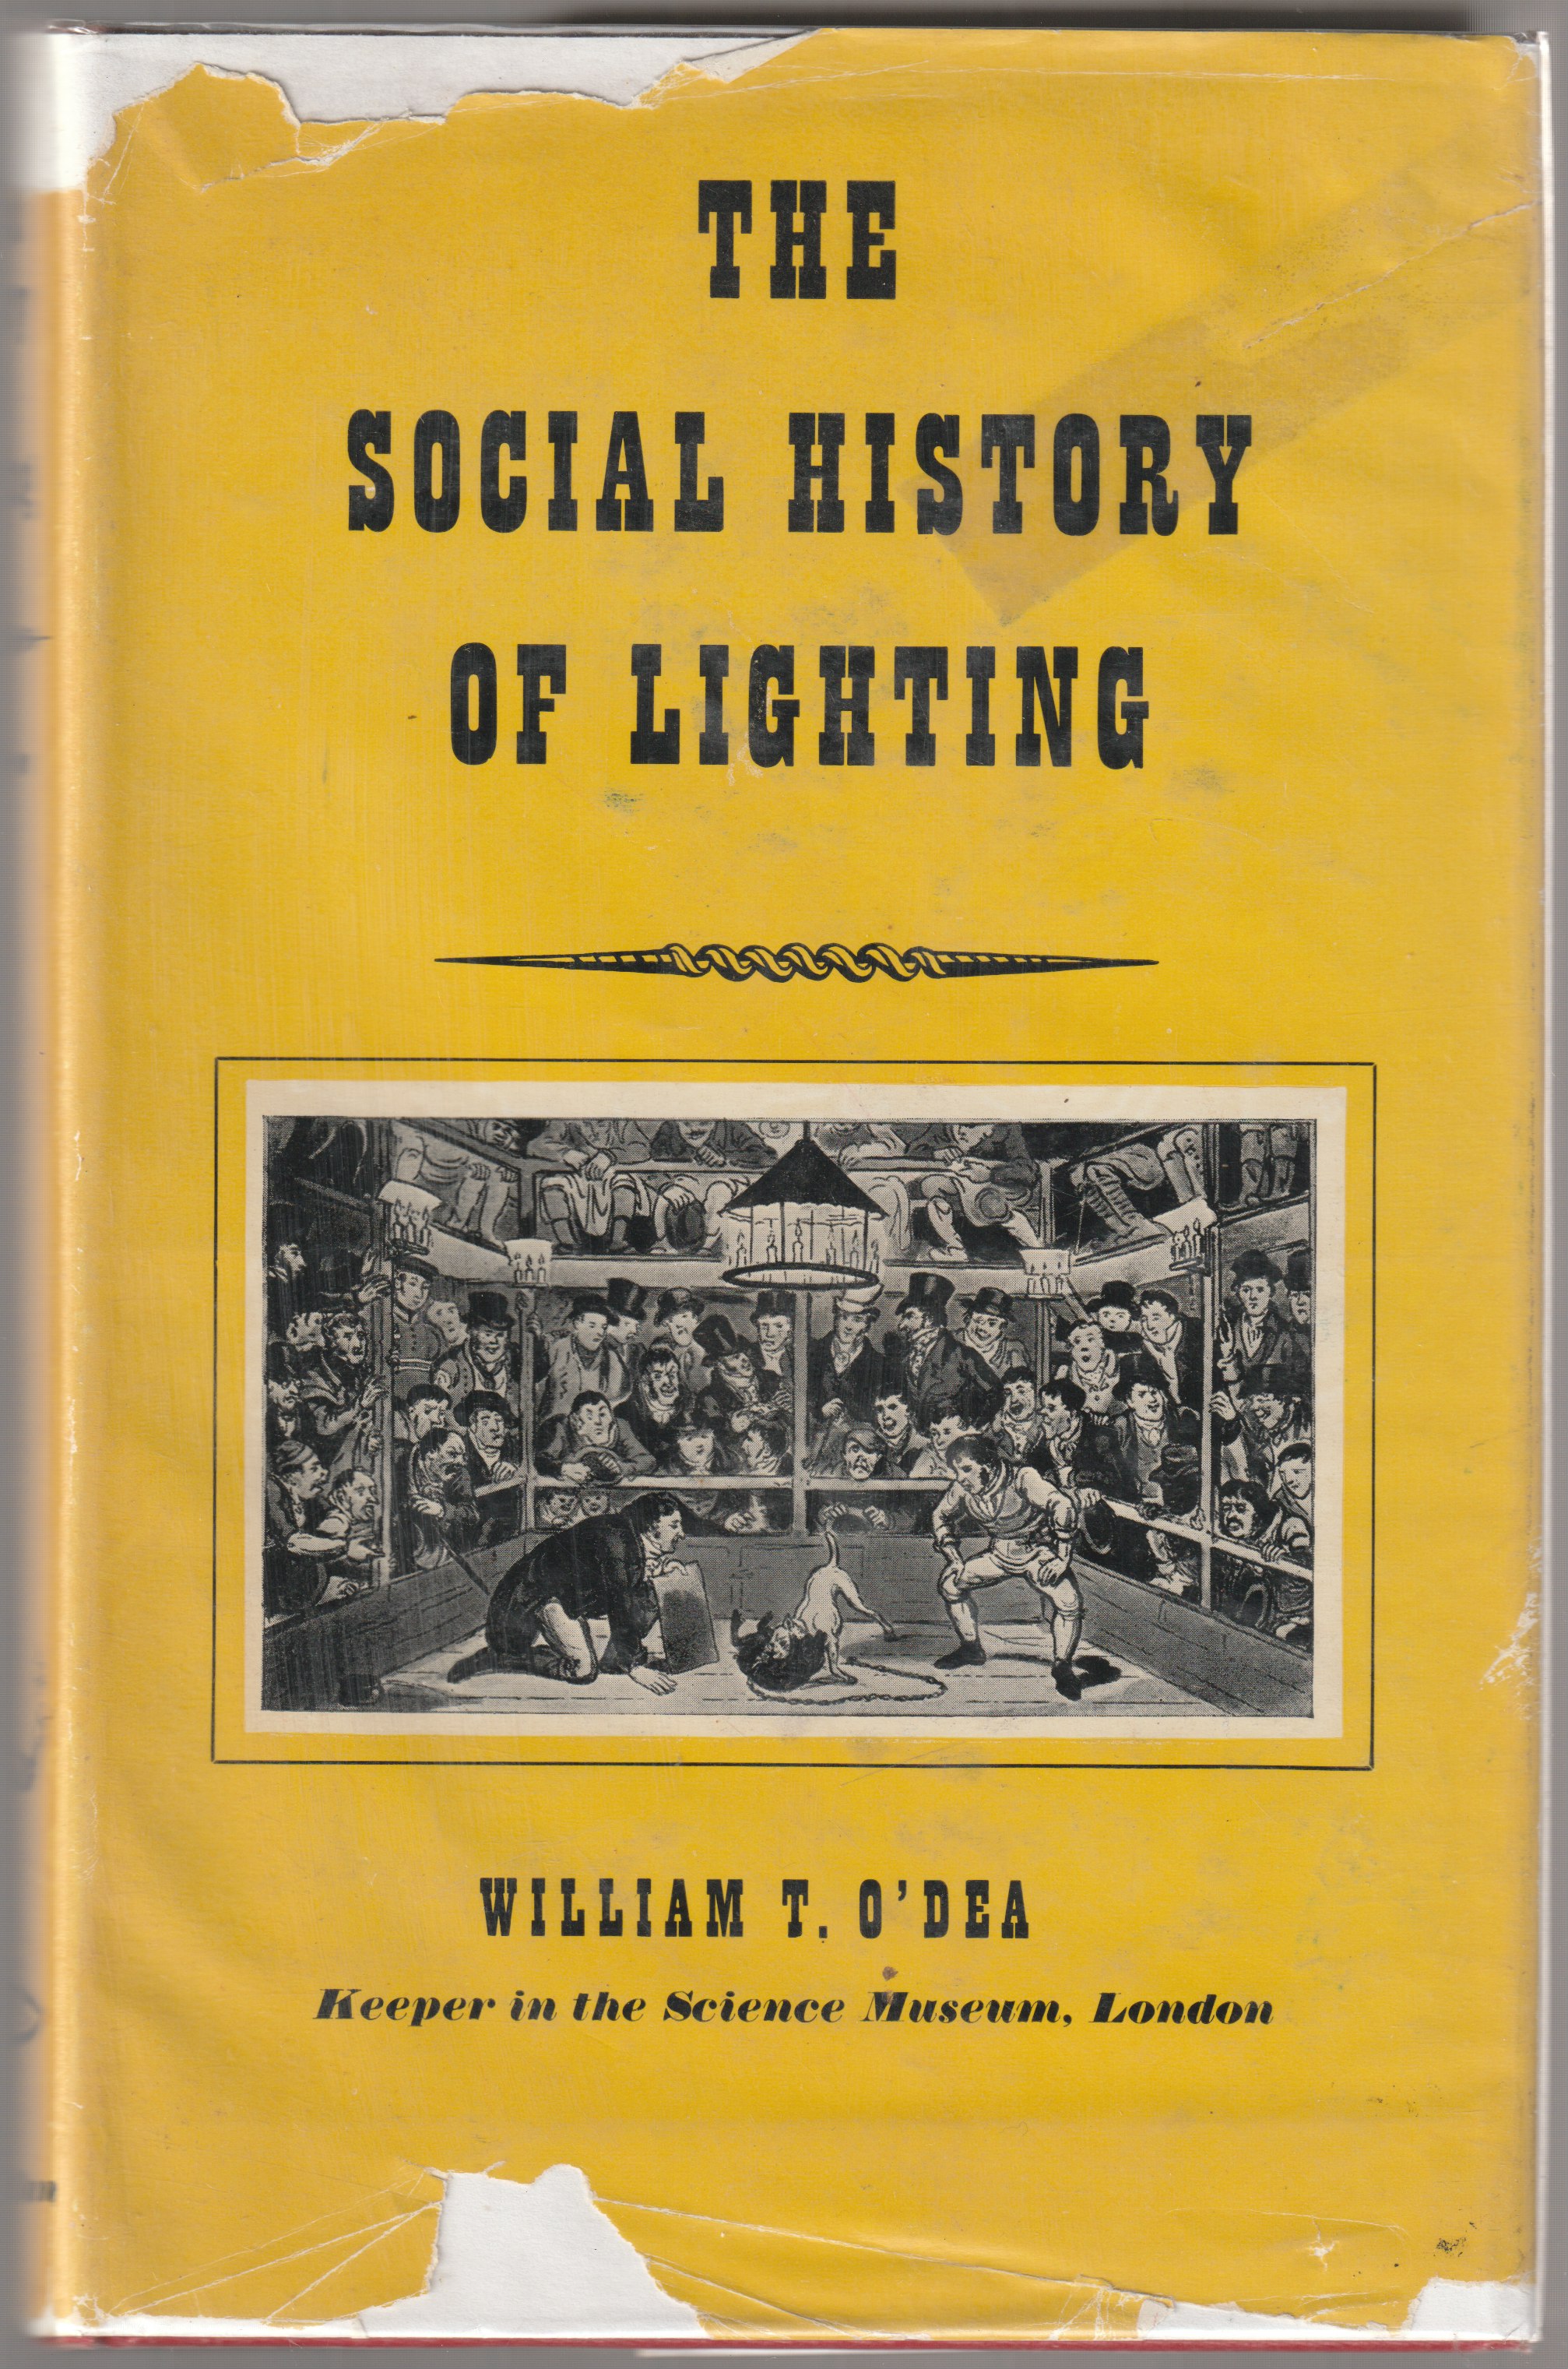 The social history of lighting.